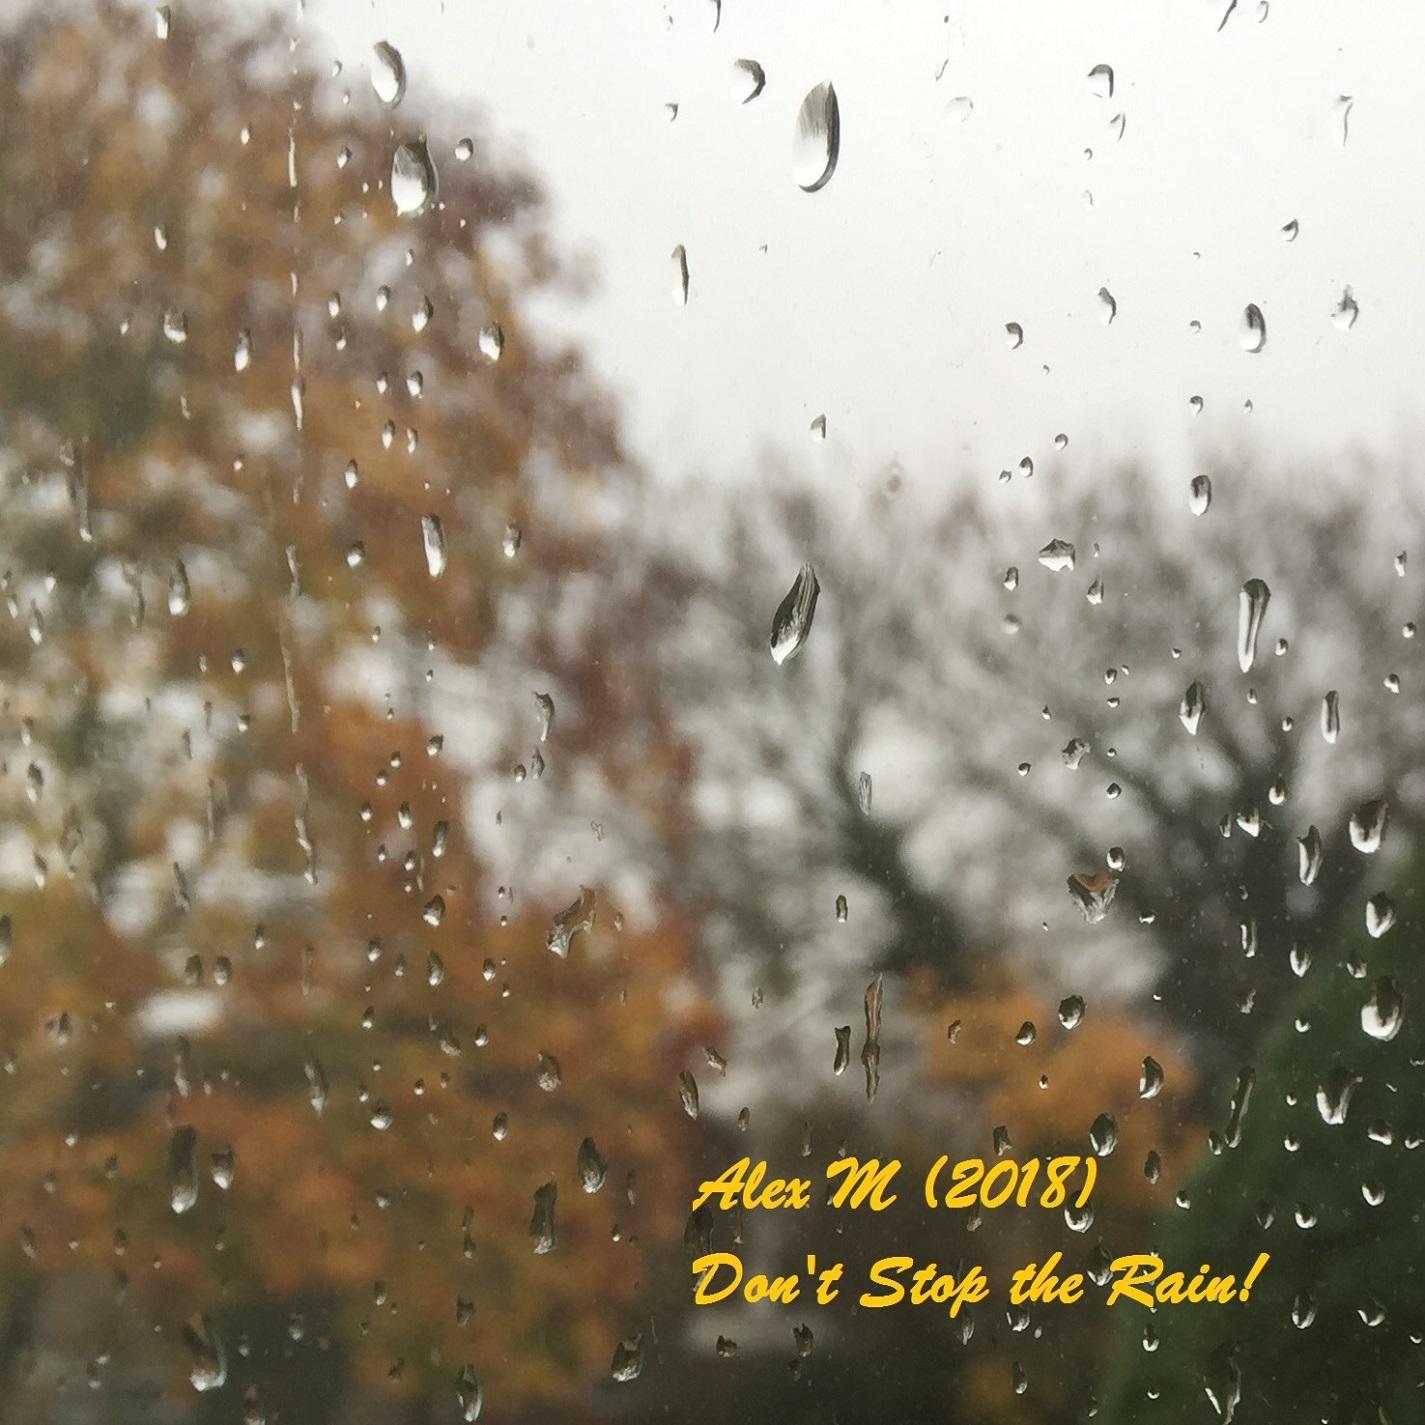 Don't Stop the Rain!